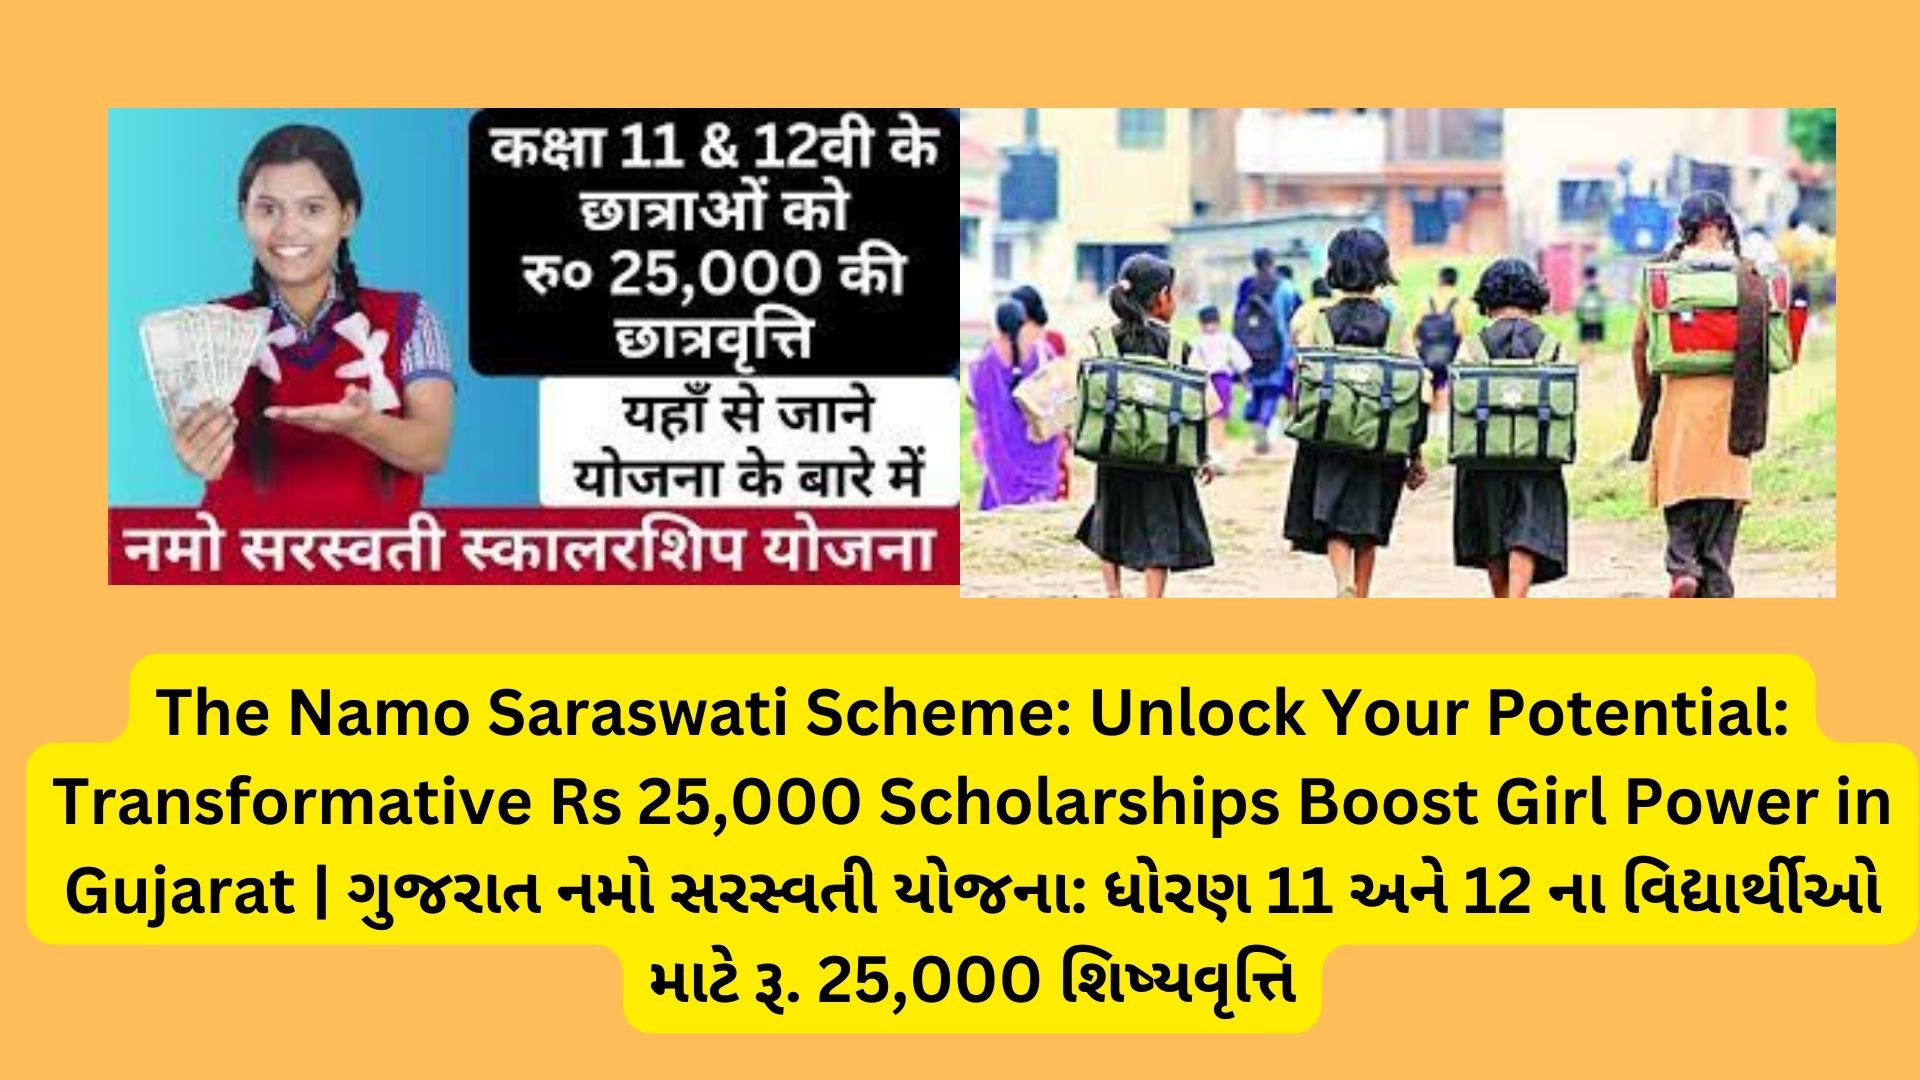 The Namo Saraswati Scheme: Unlock Your Potential: Transformative Rs 25,000 Scholarships Boost Girl Power in Gujarat | ગુજરાત નમો સરસ્વતી યોજના: ધોરણ 11 અને 12 ના વિદ્યાર્થીઓ માટે રૂ. 25,000 શિષ્યવૃત્તિ